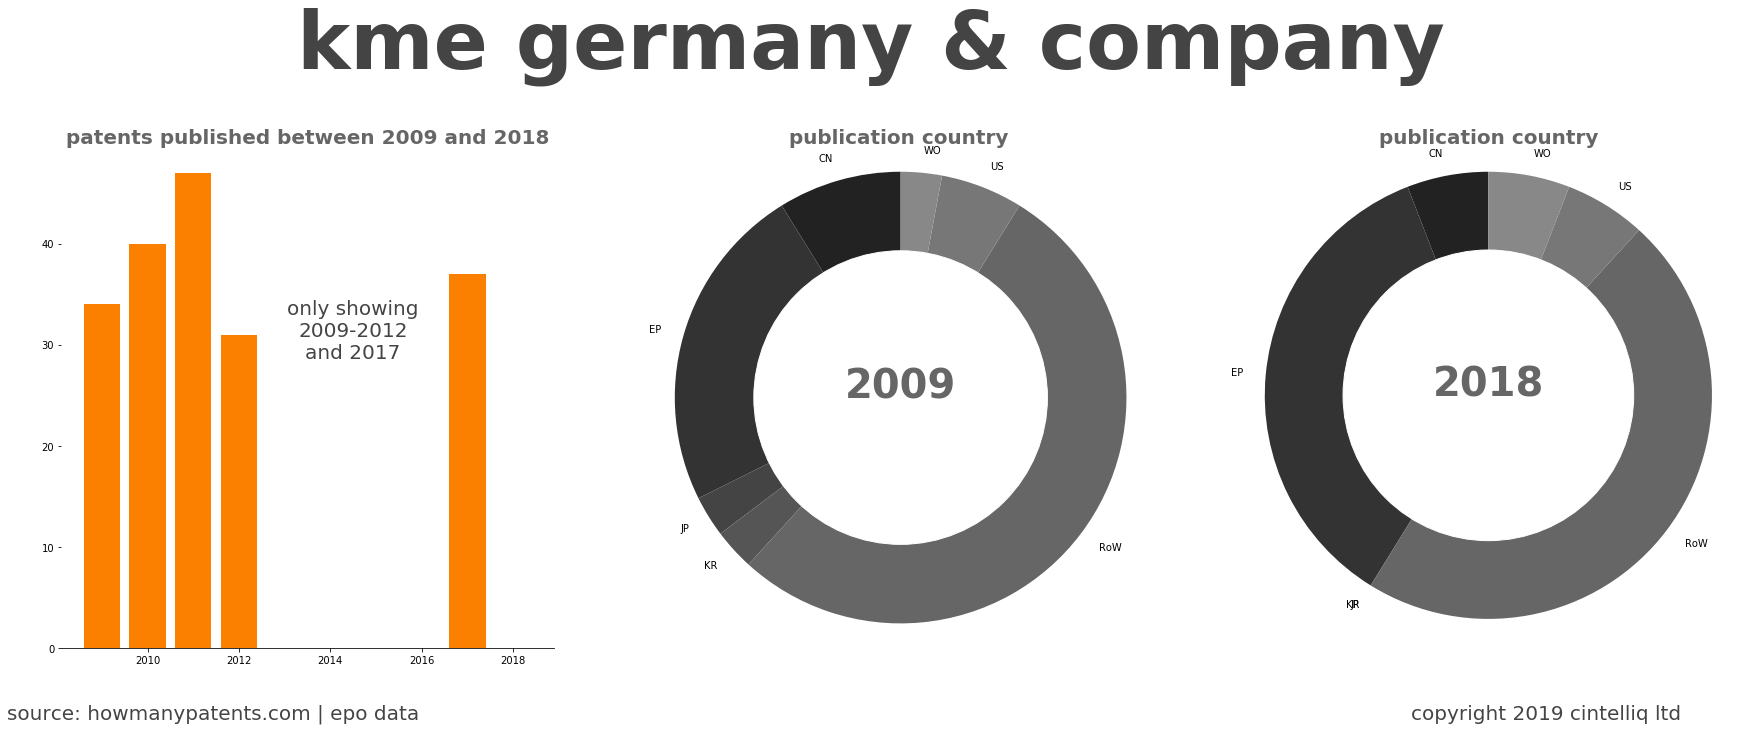 summary of patents for Kme Germany & Company